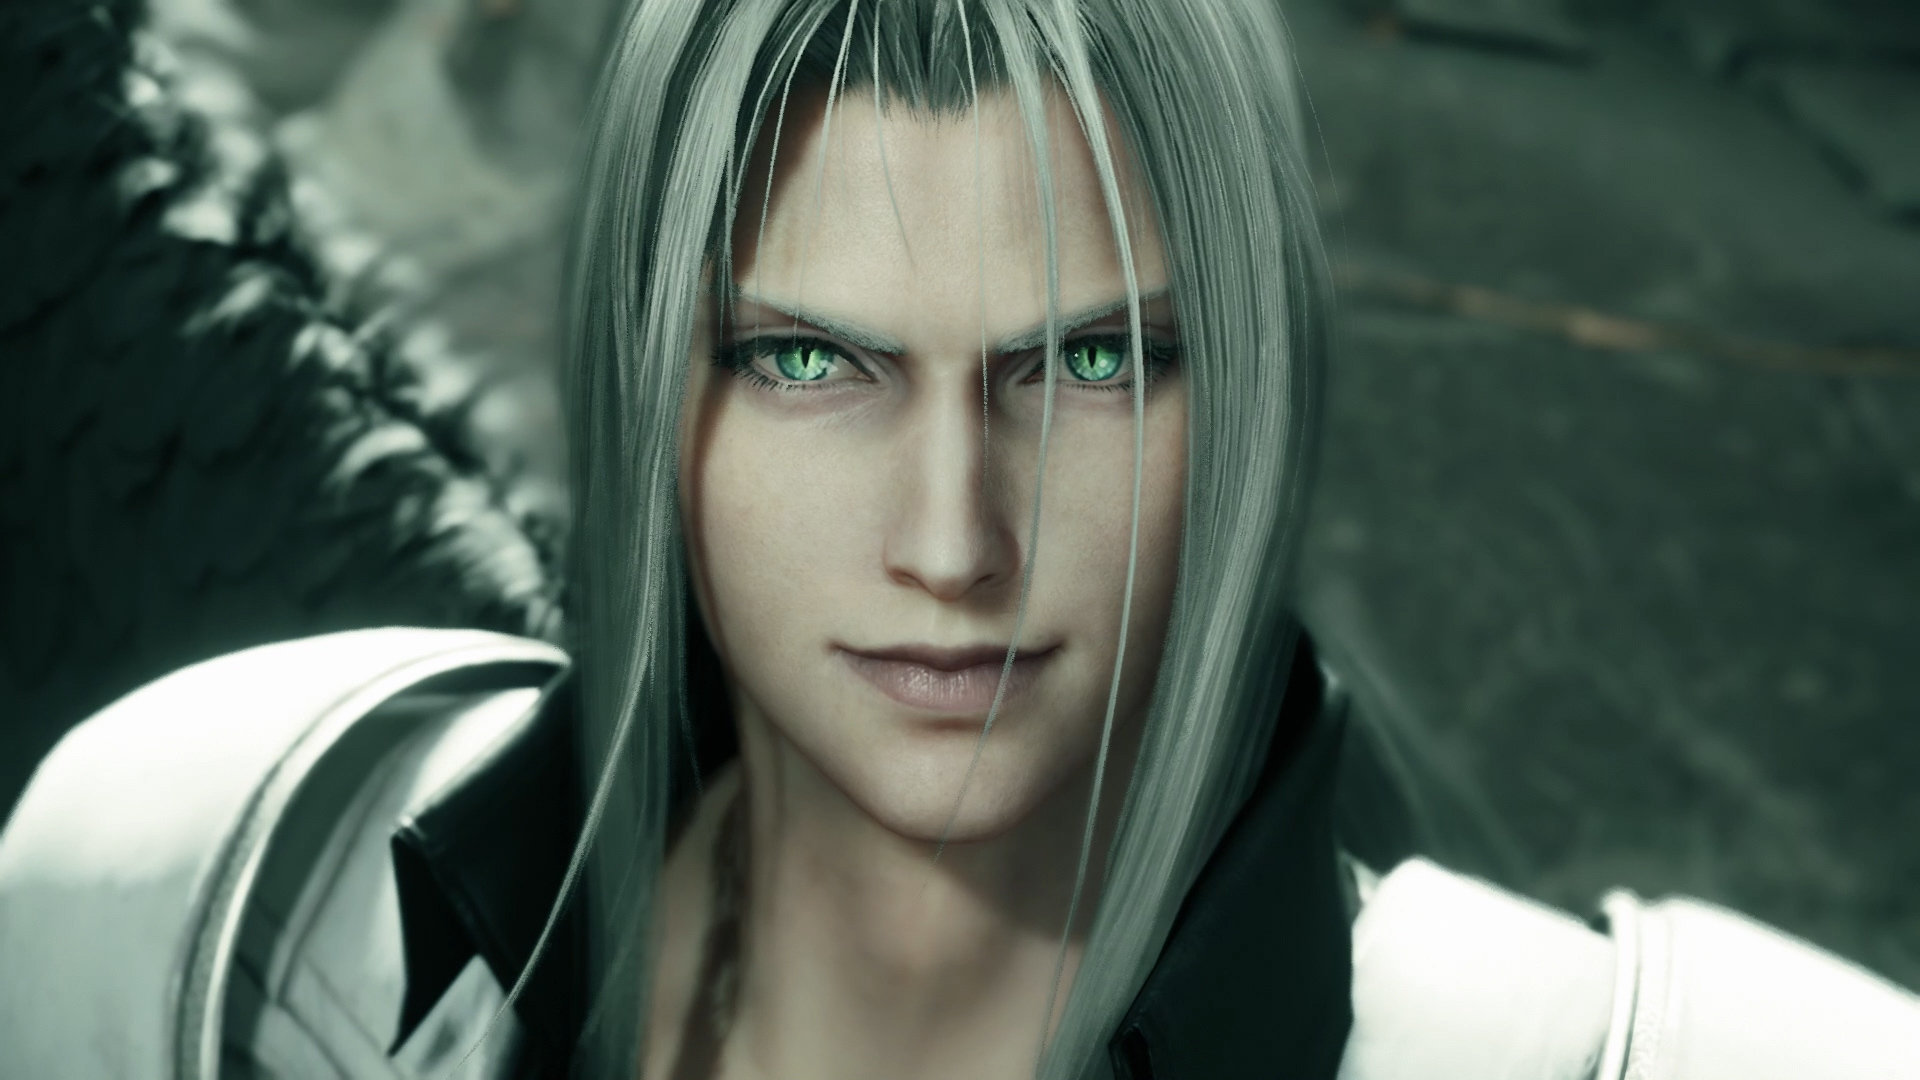 Final Fantasy VII Remake Intergrade is coming to Steam